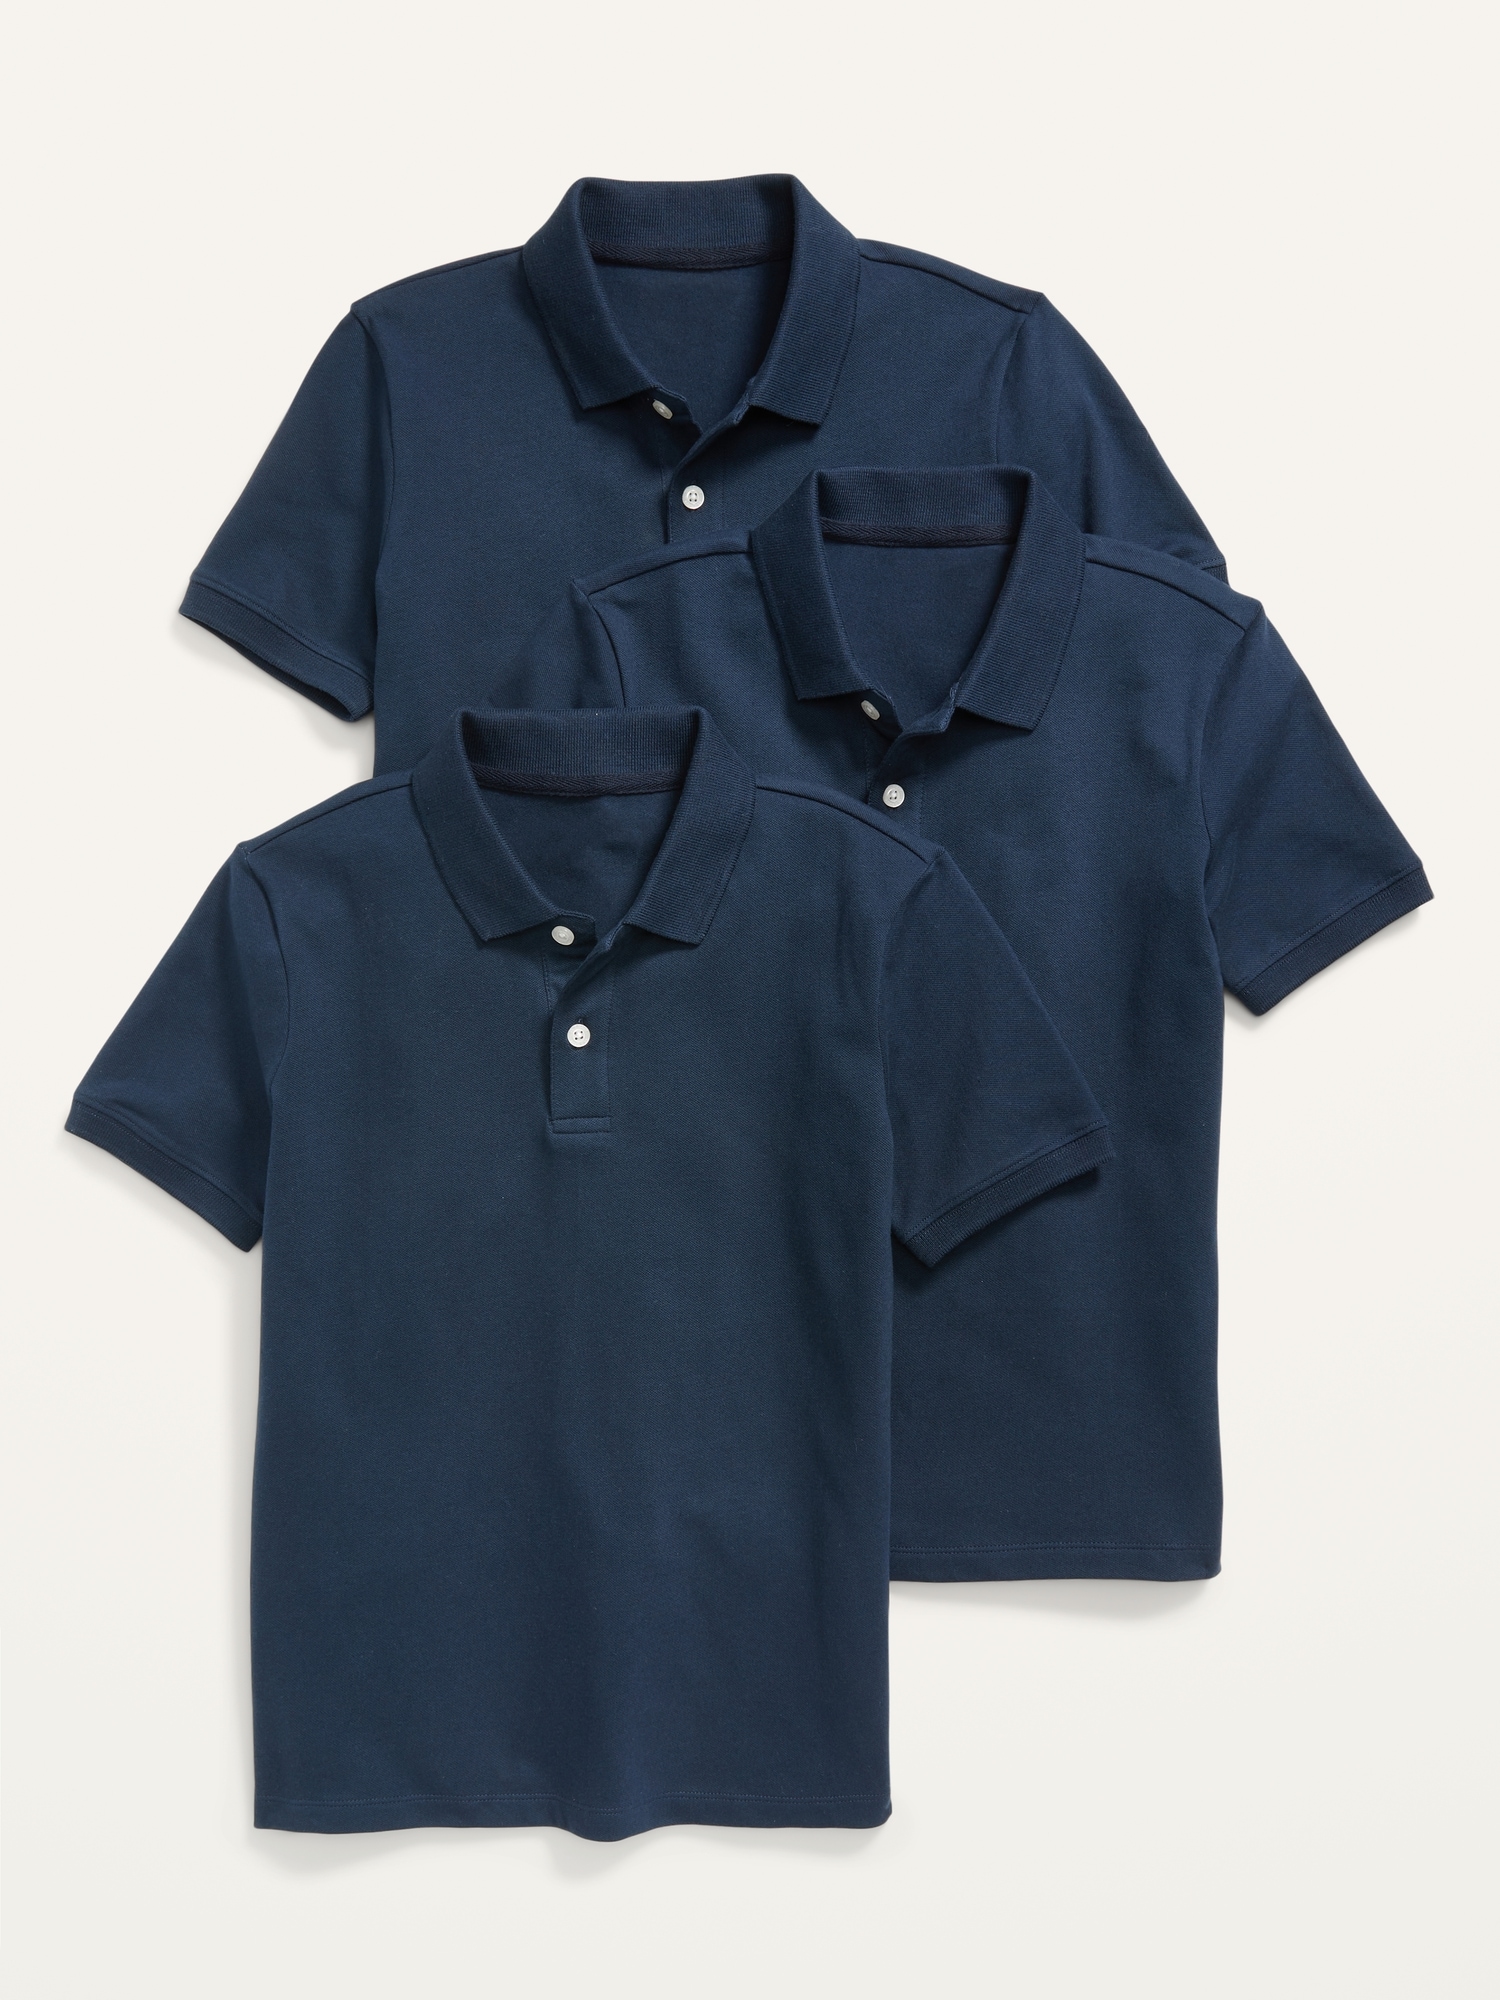 Discriminate Integration labyrinth School Uniform Polo Shirt 3-Pack For Boys | Old Navy